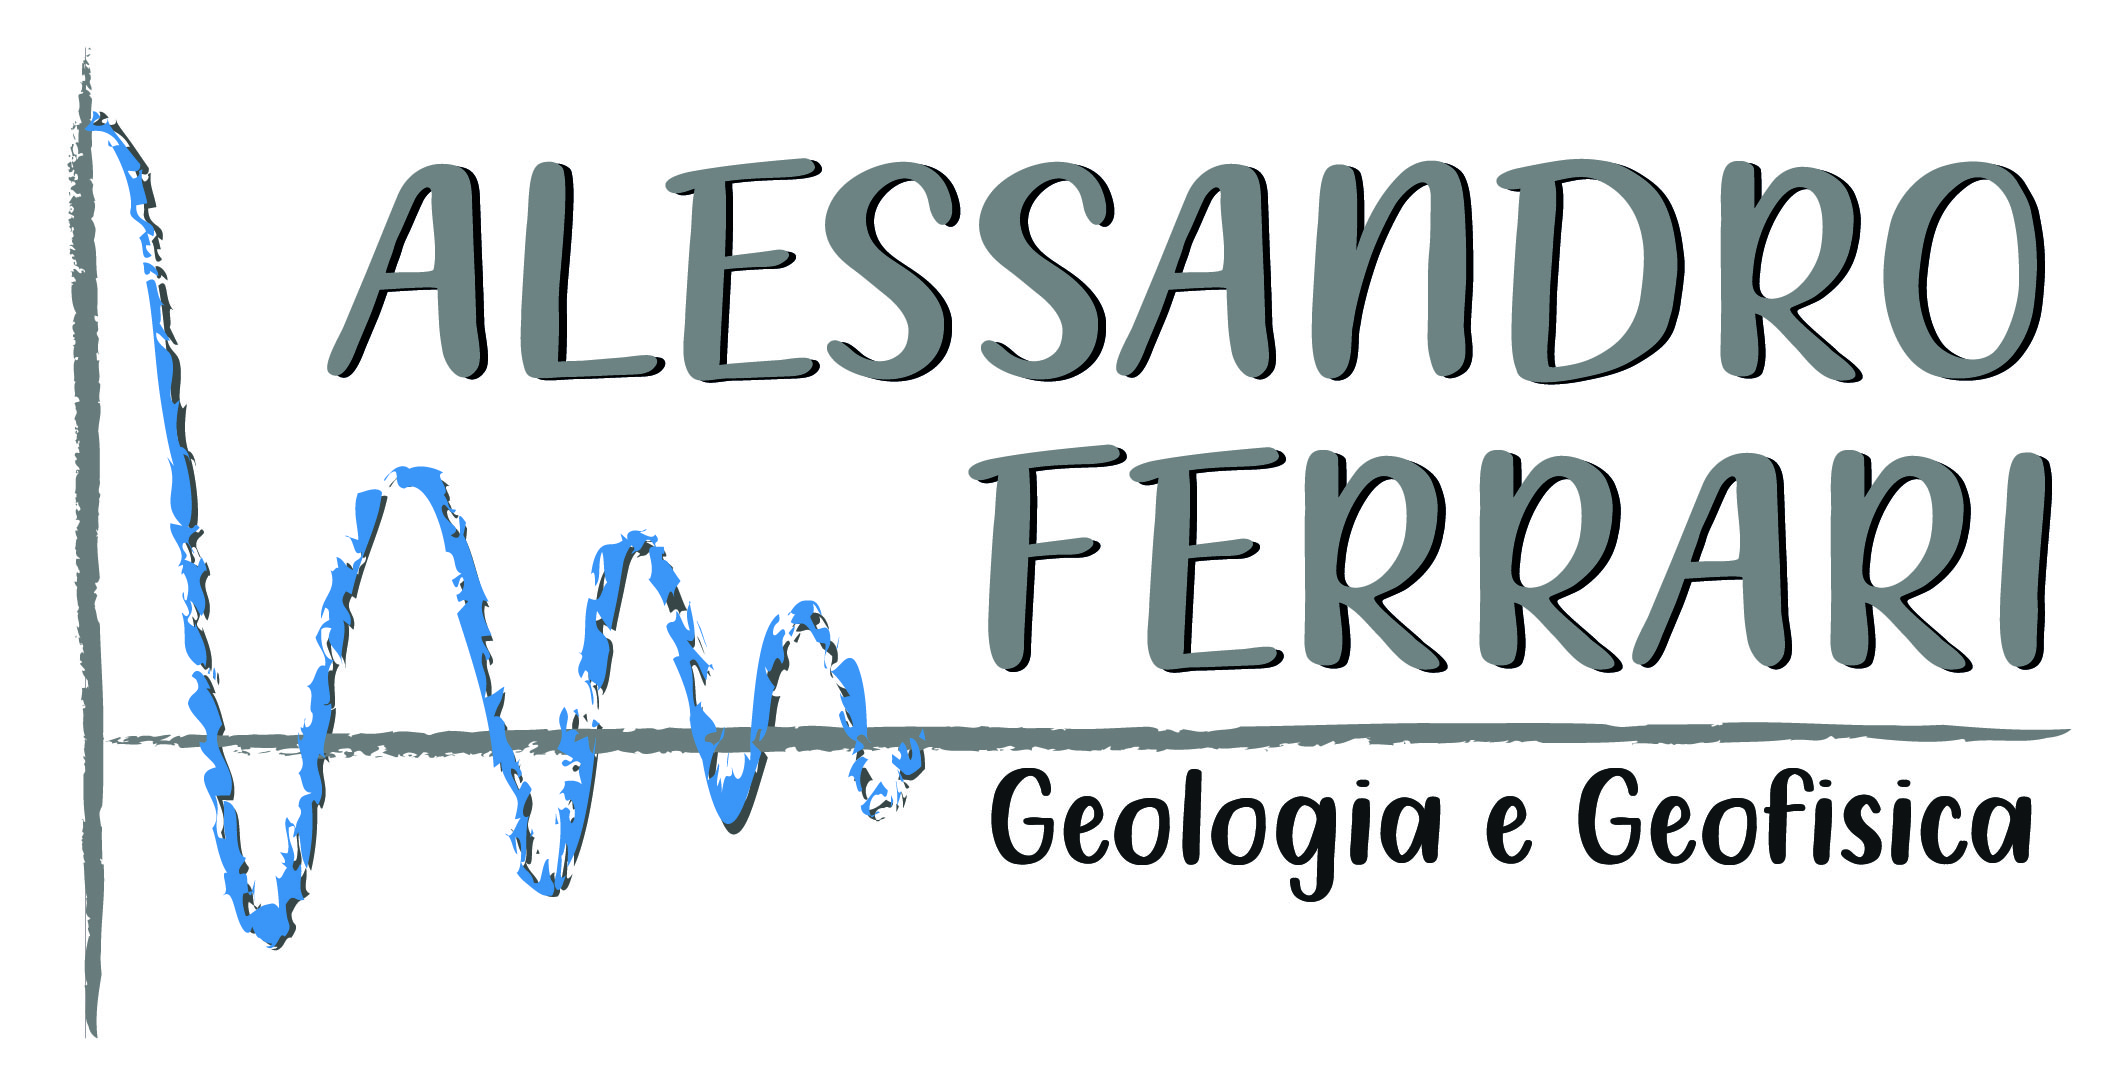 Alessandro Ferrari | Geologia e Geofisica